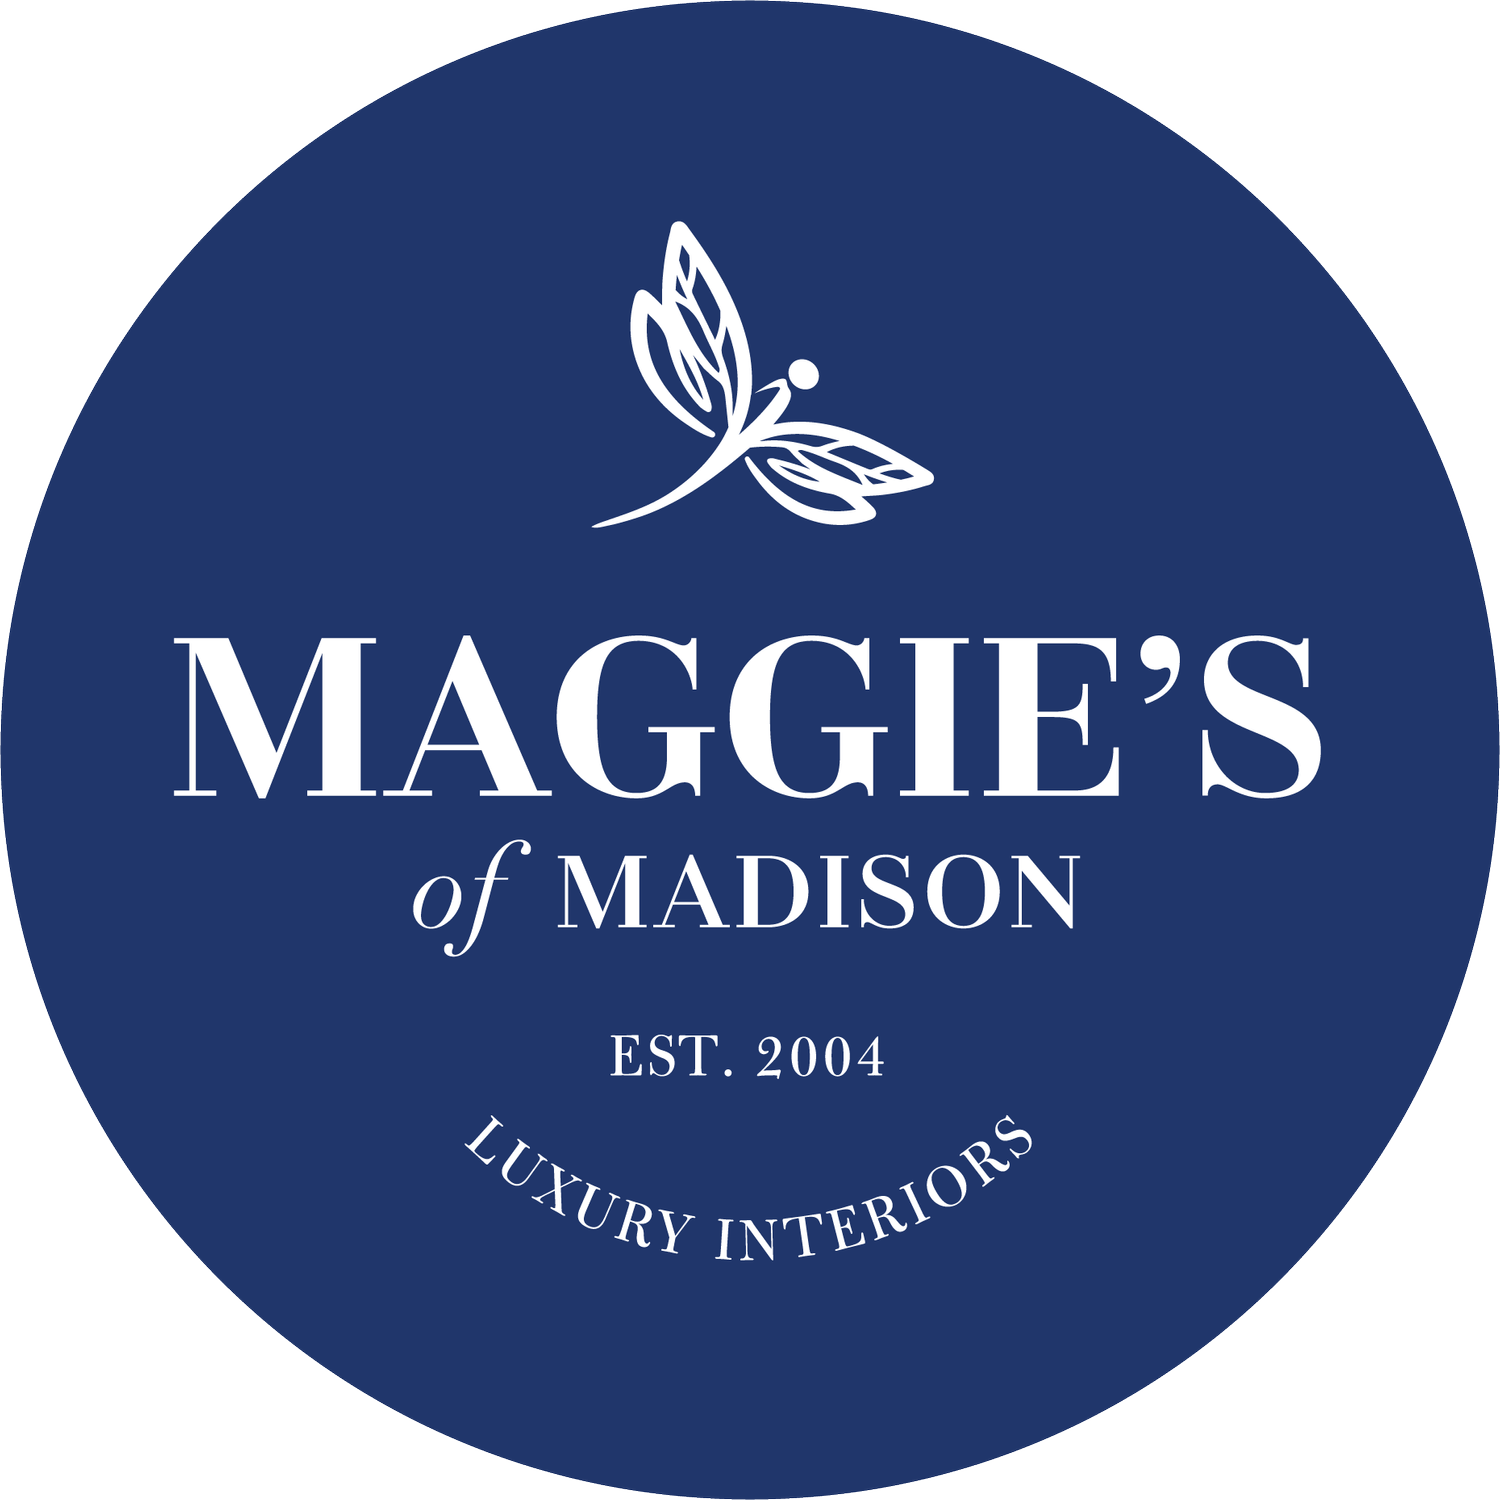 Maggie's of Madison